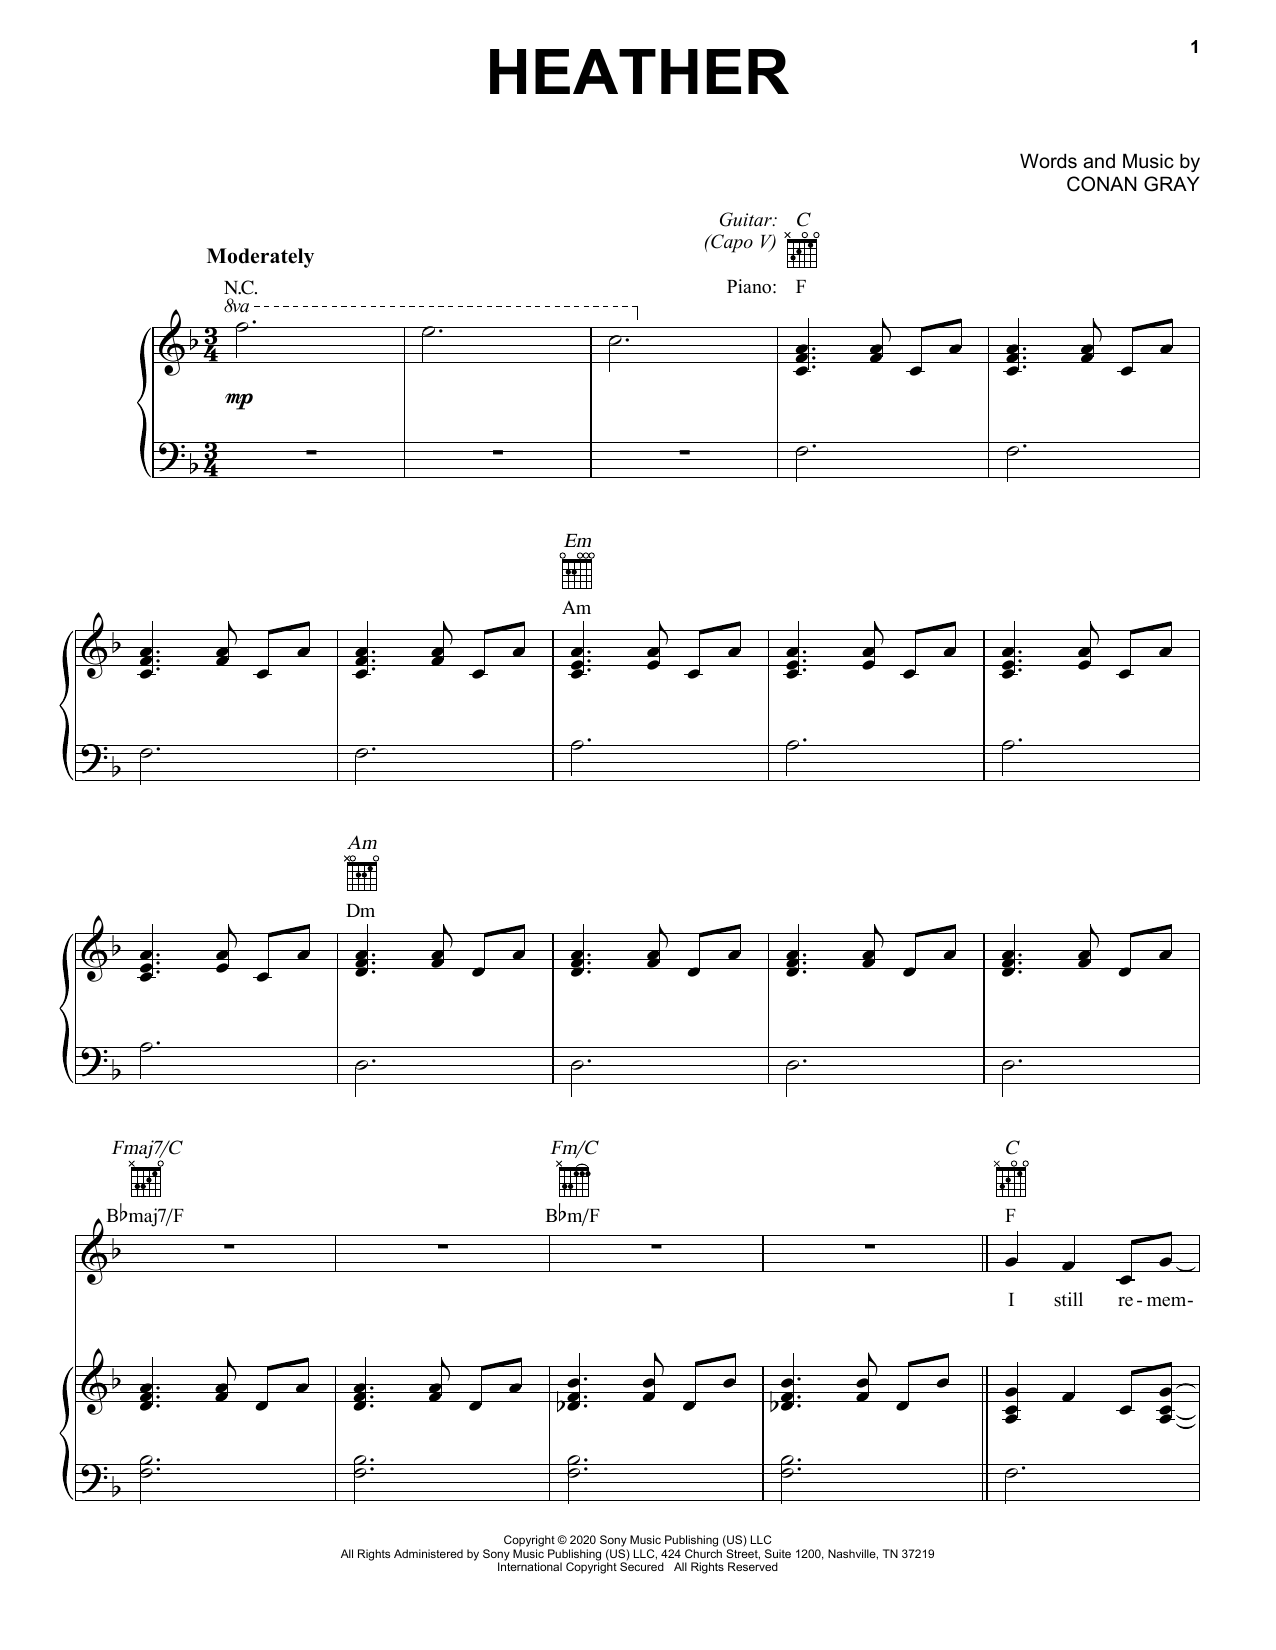 Conan Gray Heather Sheet Music Notes & Chords for Guitar Chords/Lyrics - Download or Print PDF